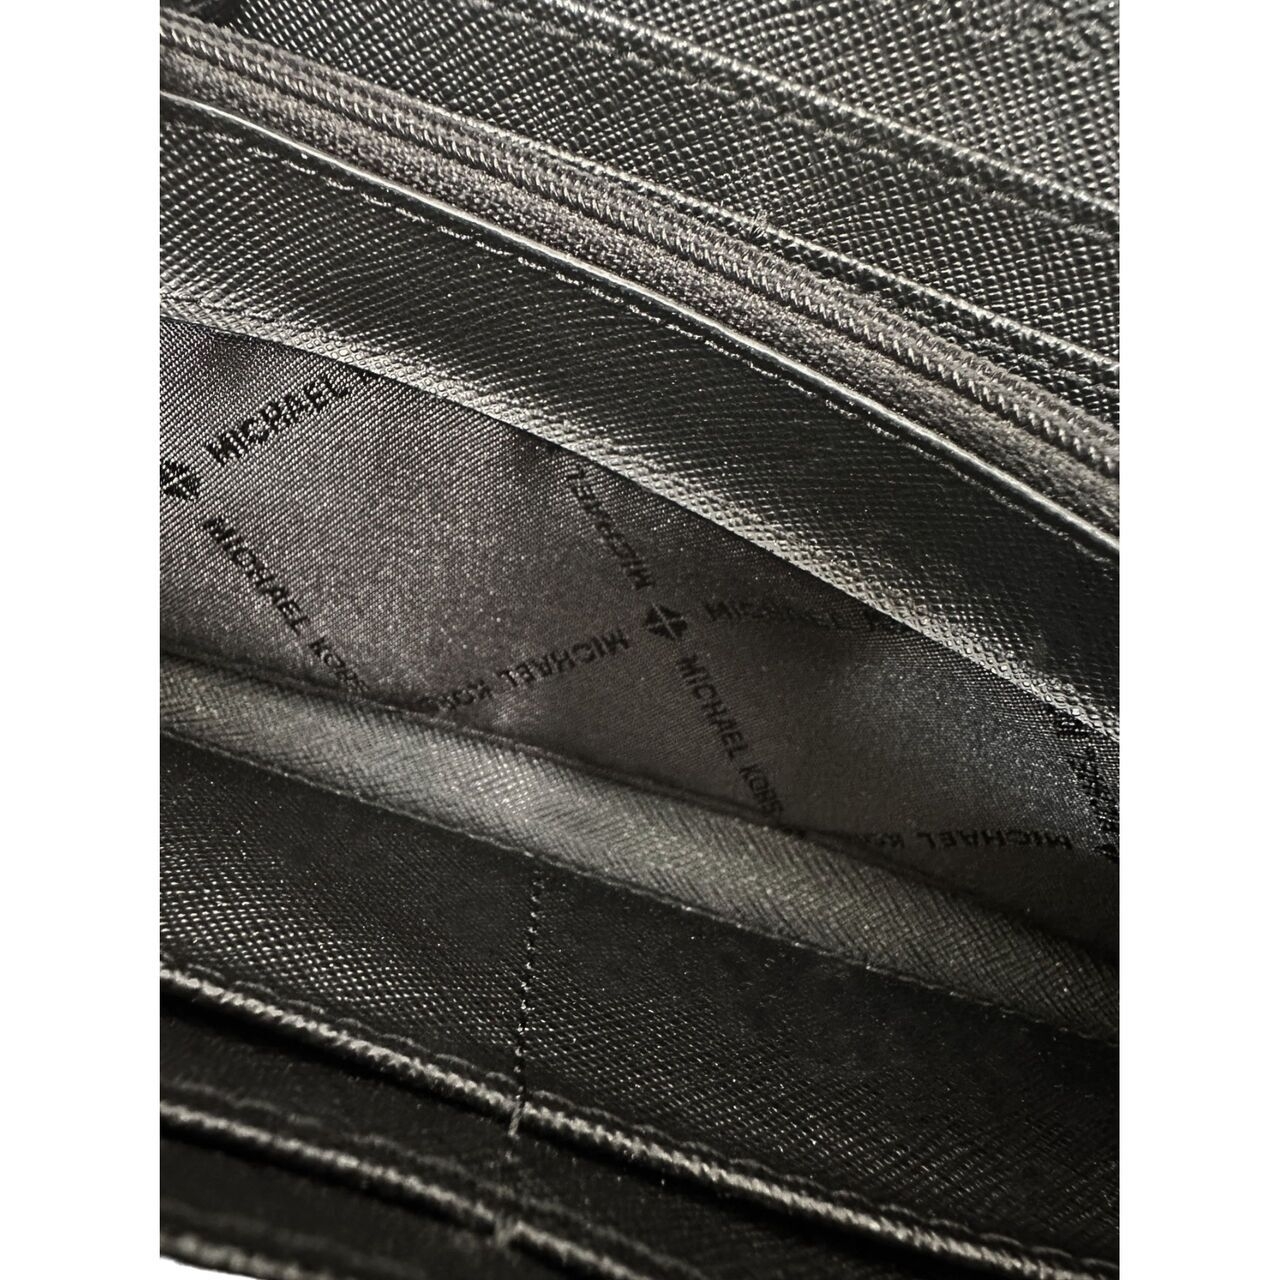 Michael Kors Black Leather Long Wallet